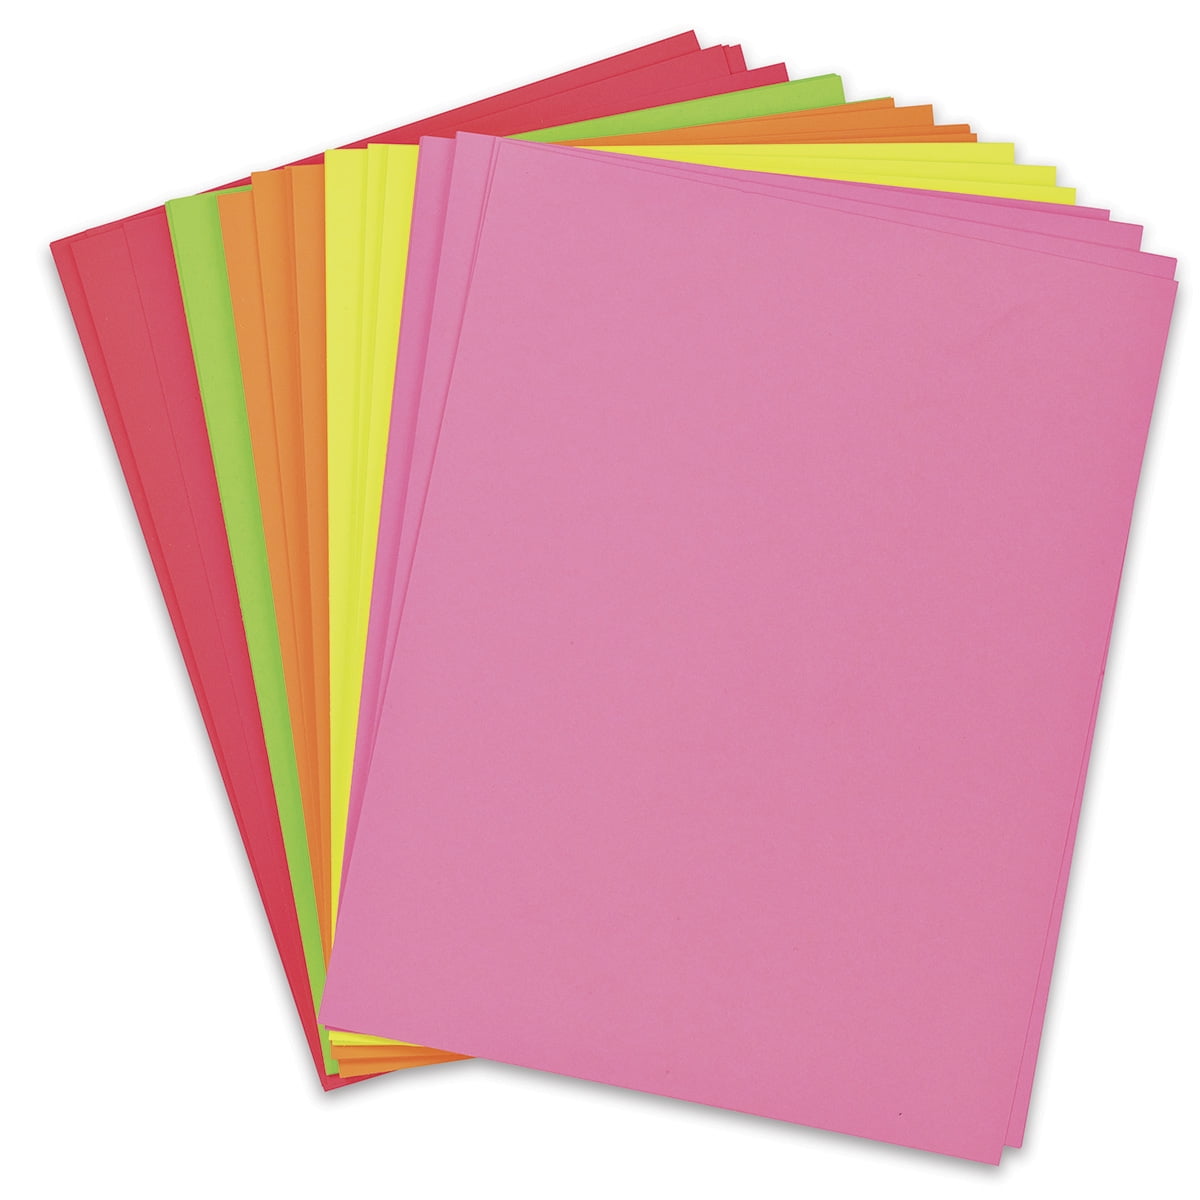 ArrayÂ® Card Stock, Assorted Colors, 100 Sheets 